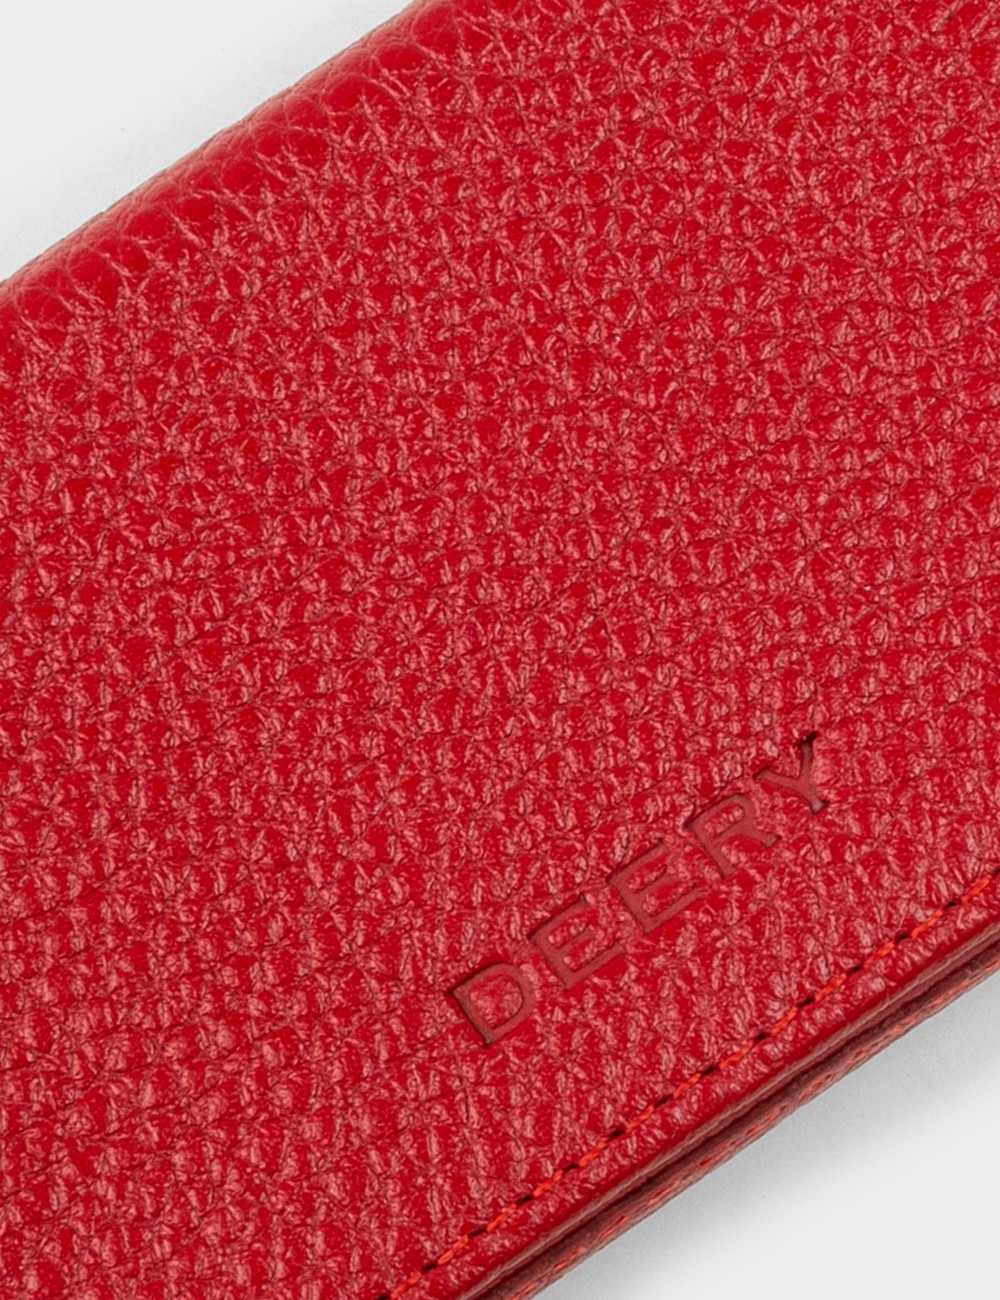  Leather Red Men's Wallet - 00522MKRMZ01